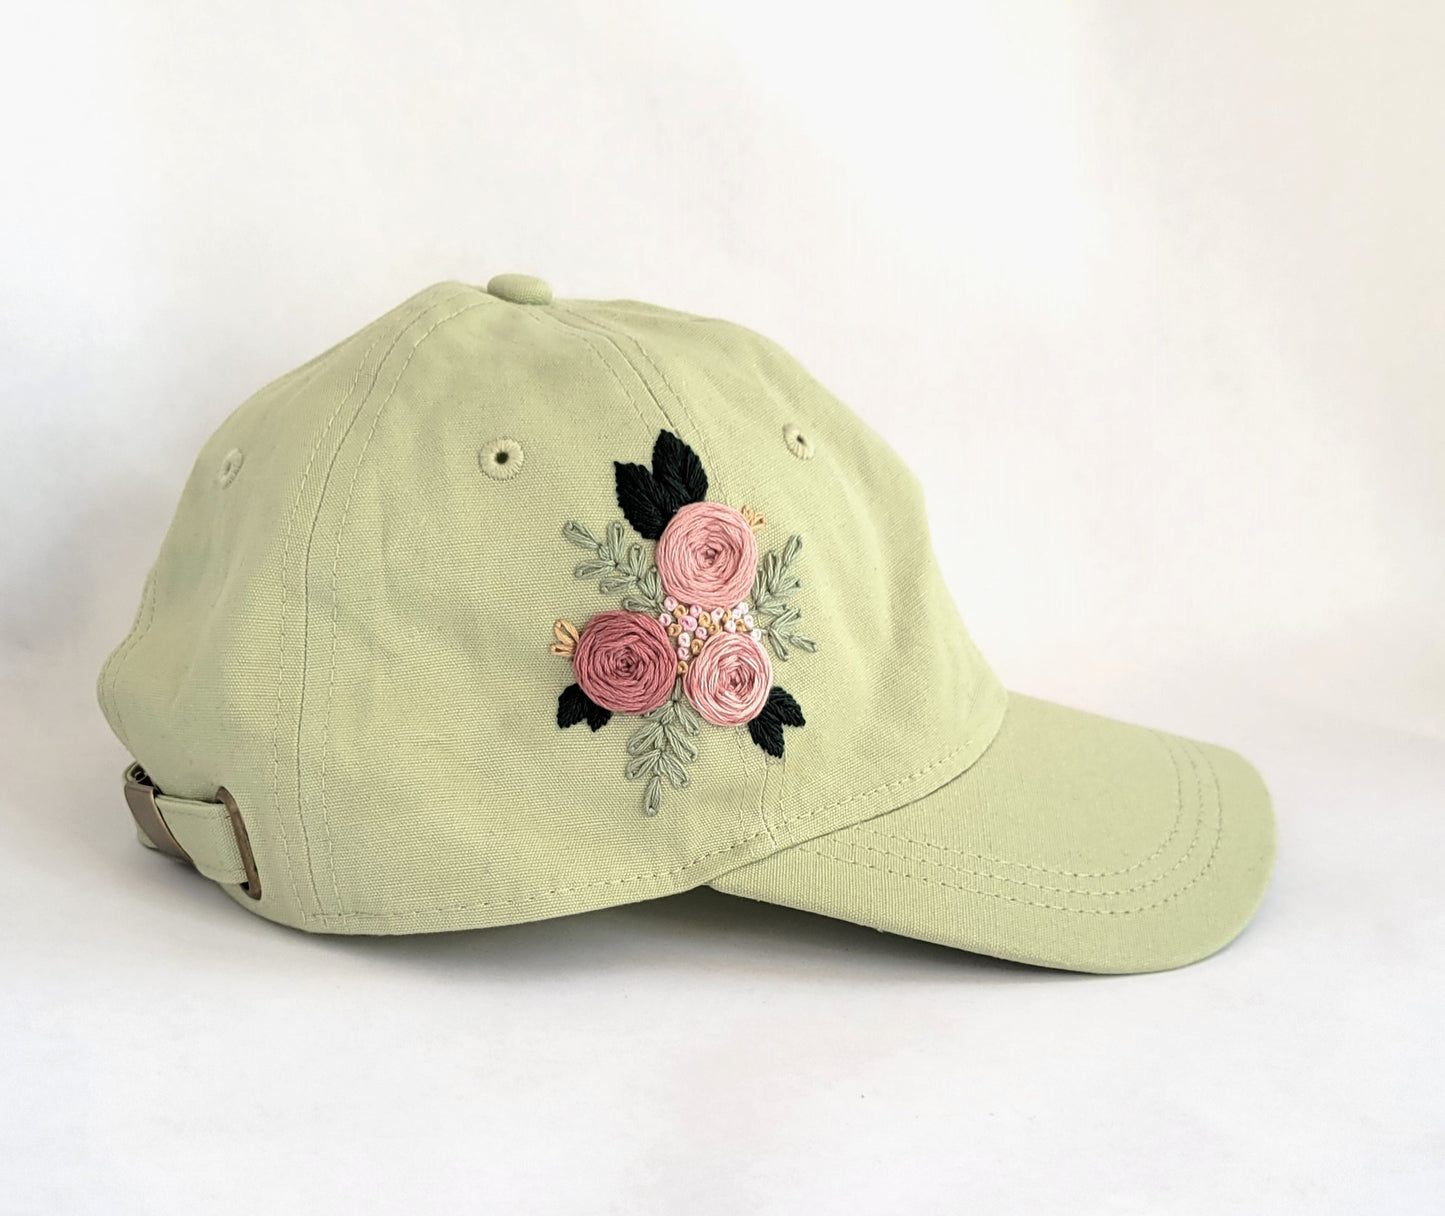 Embroidered Baseball Hat - Light Sage Green